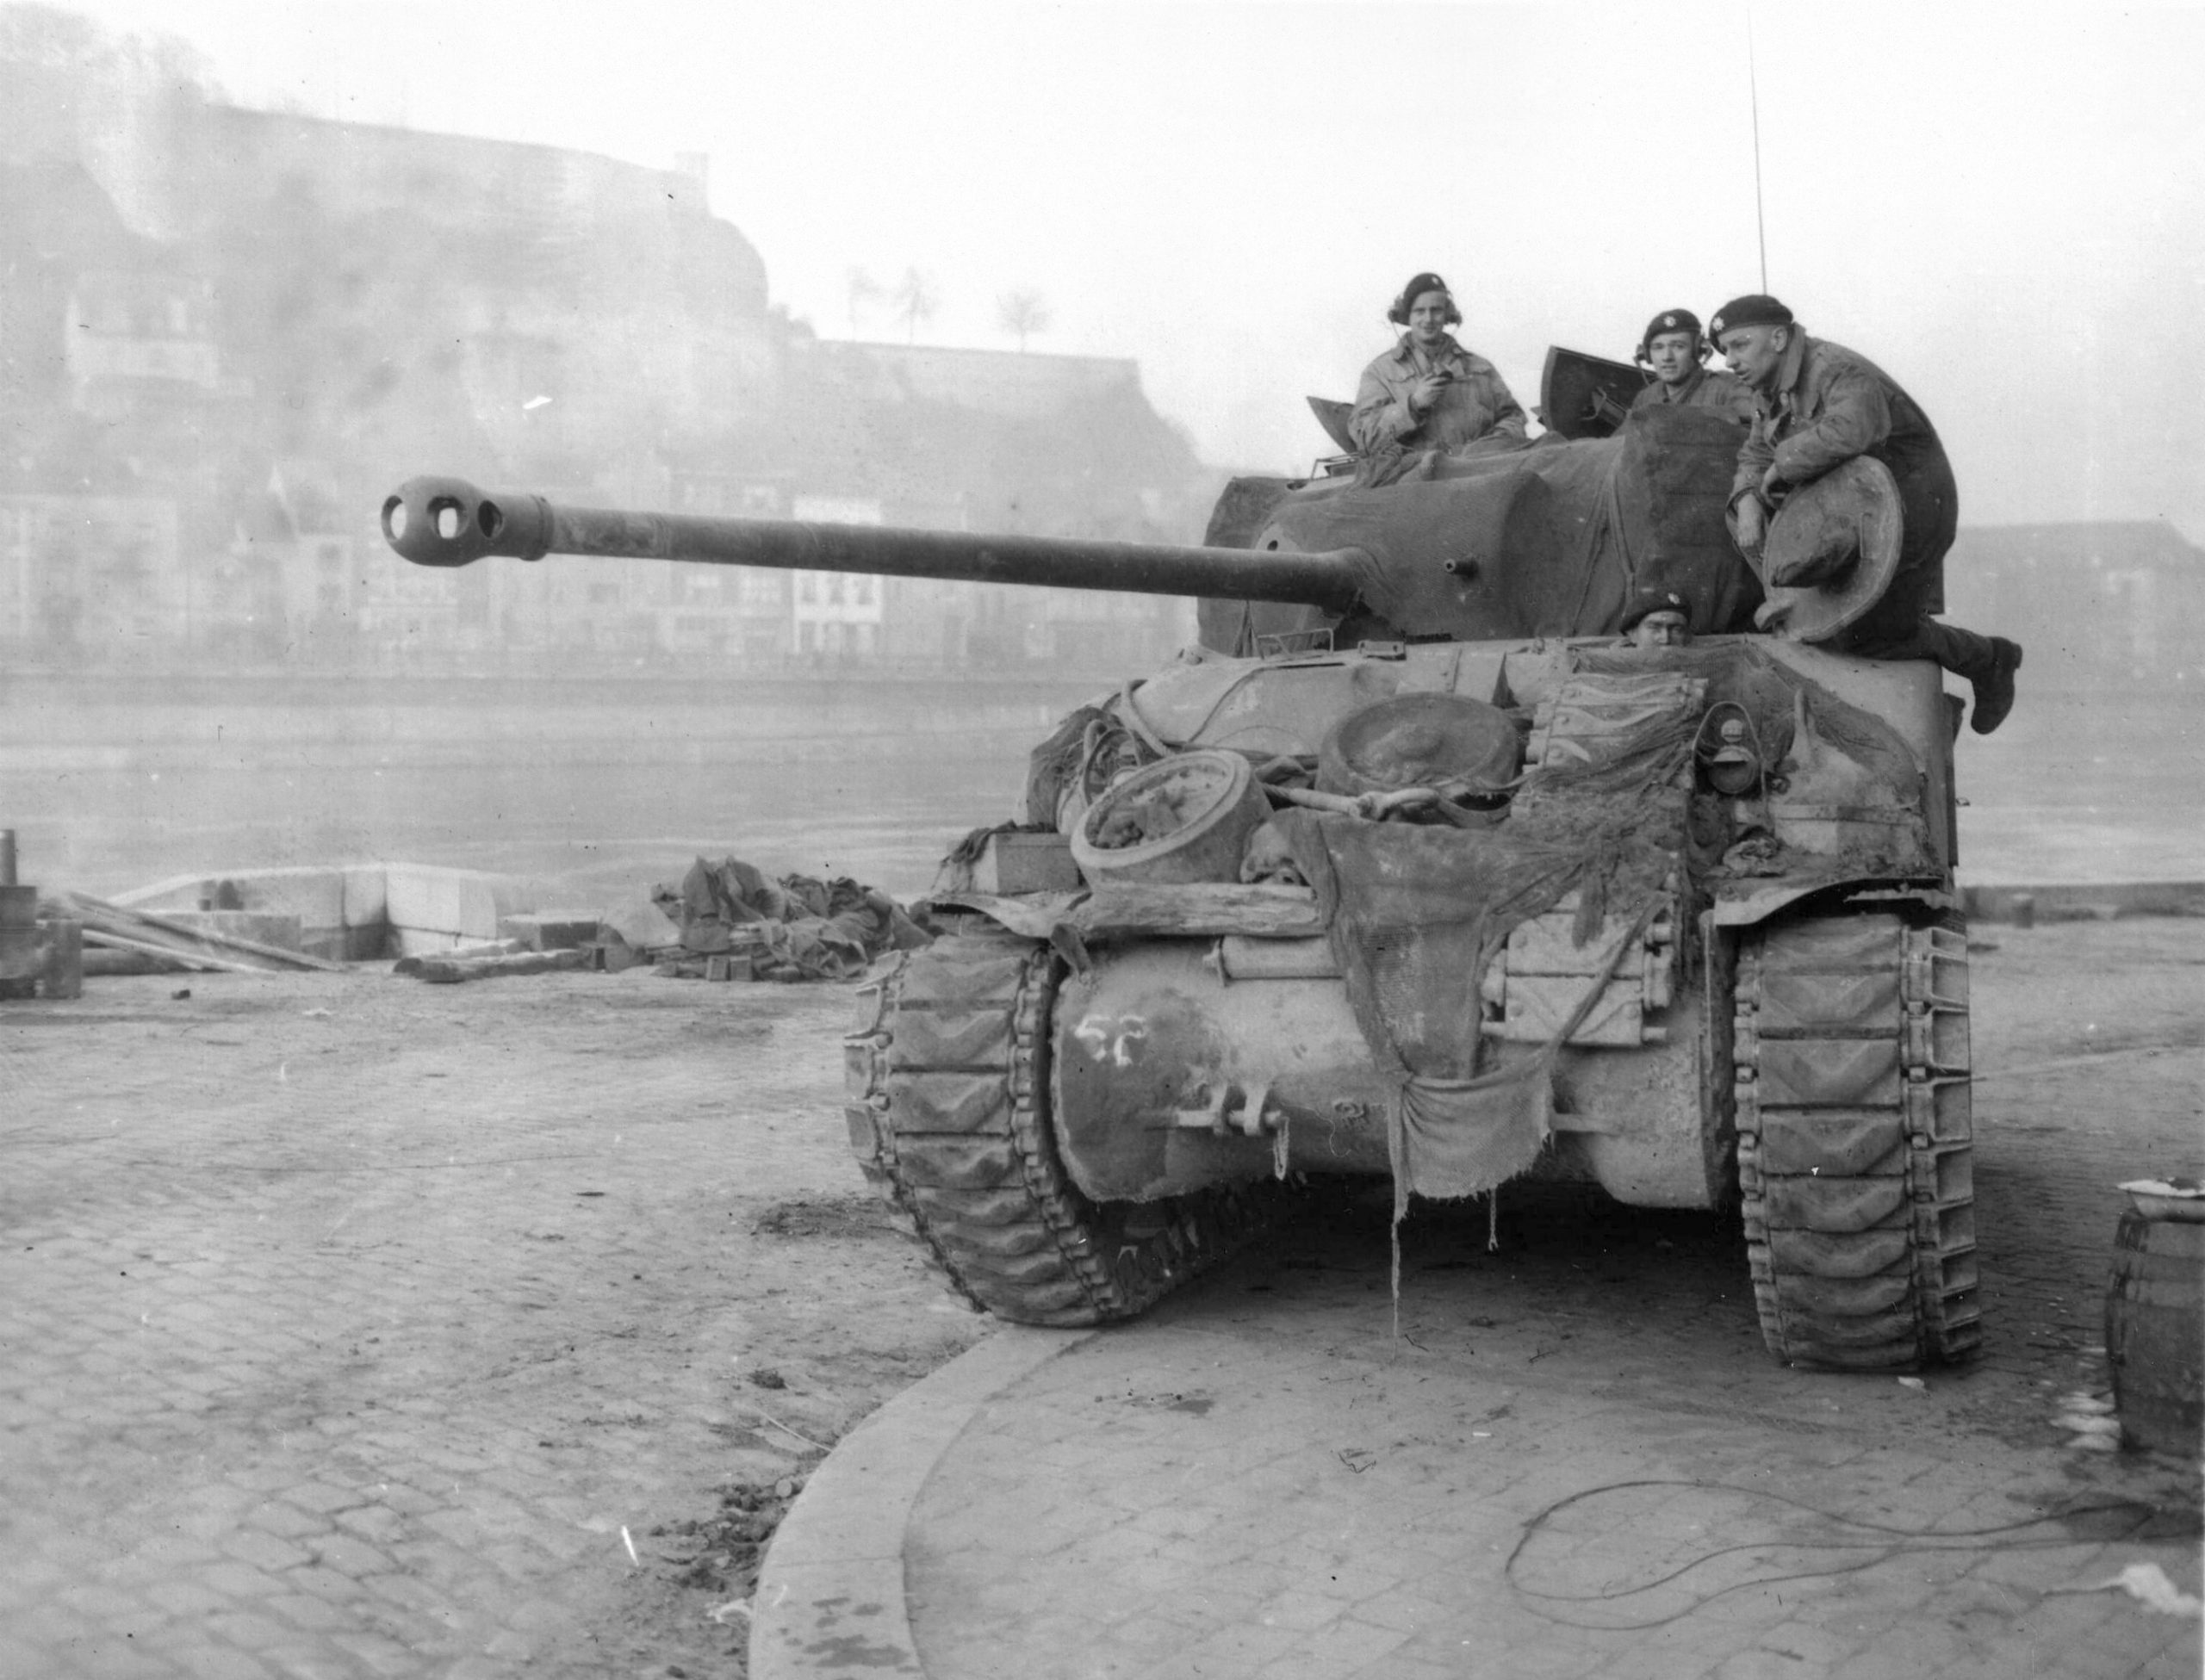 Sherman "Firefly" tank